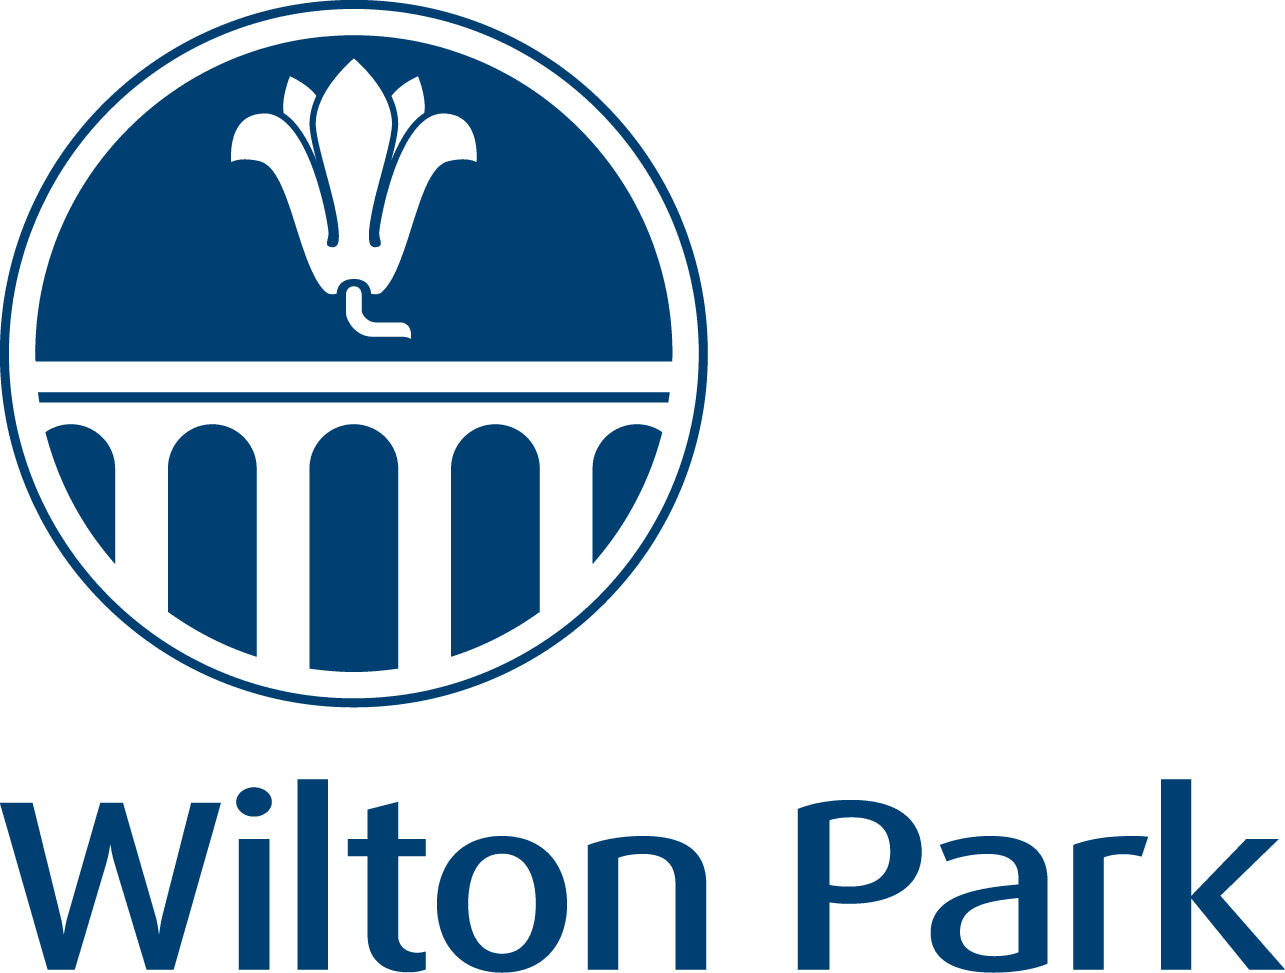 Wilton-Park